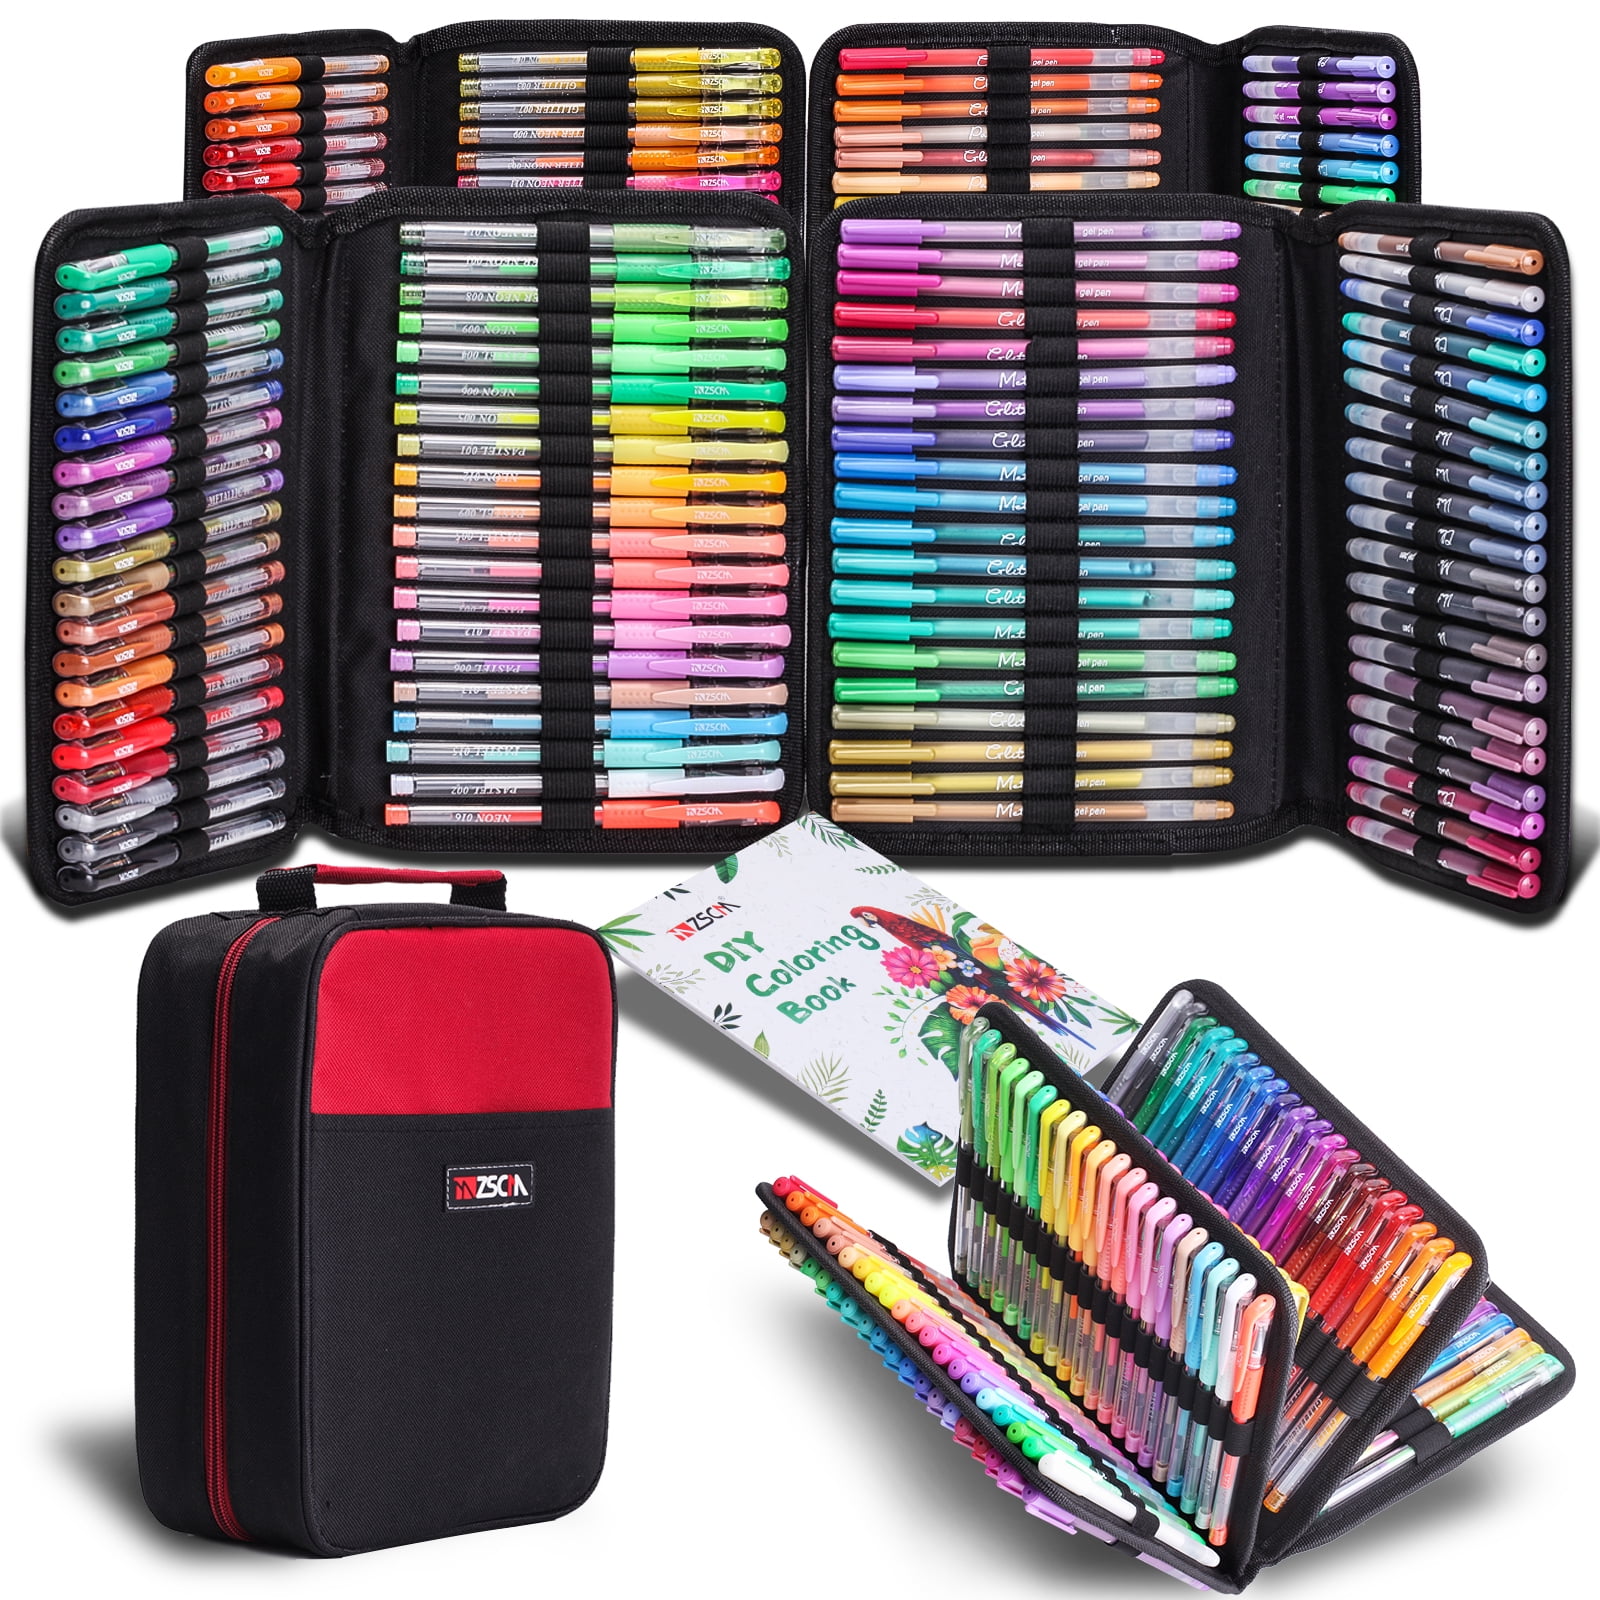 Masters Touch, Neon Premium Gel Pen Set, 1 Each of 12 Colors, Mardel